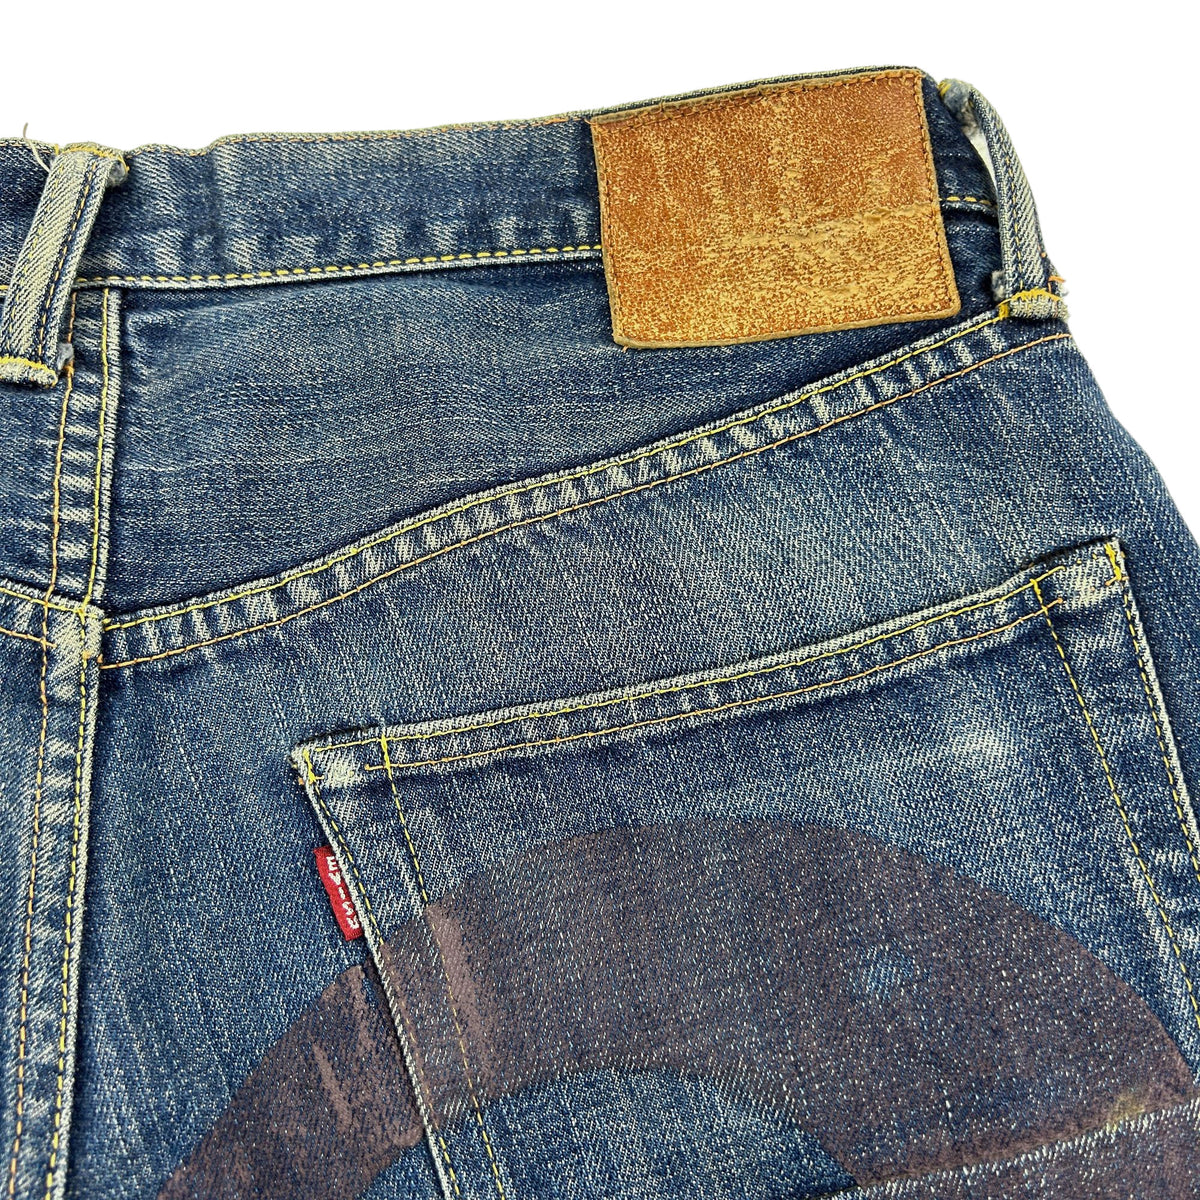 Vintage Evisu Daicock Japanese Denim Jeans Size W33